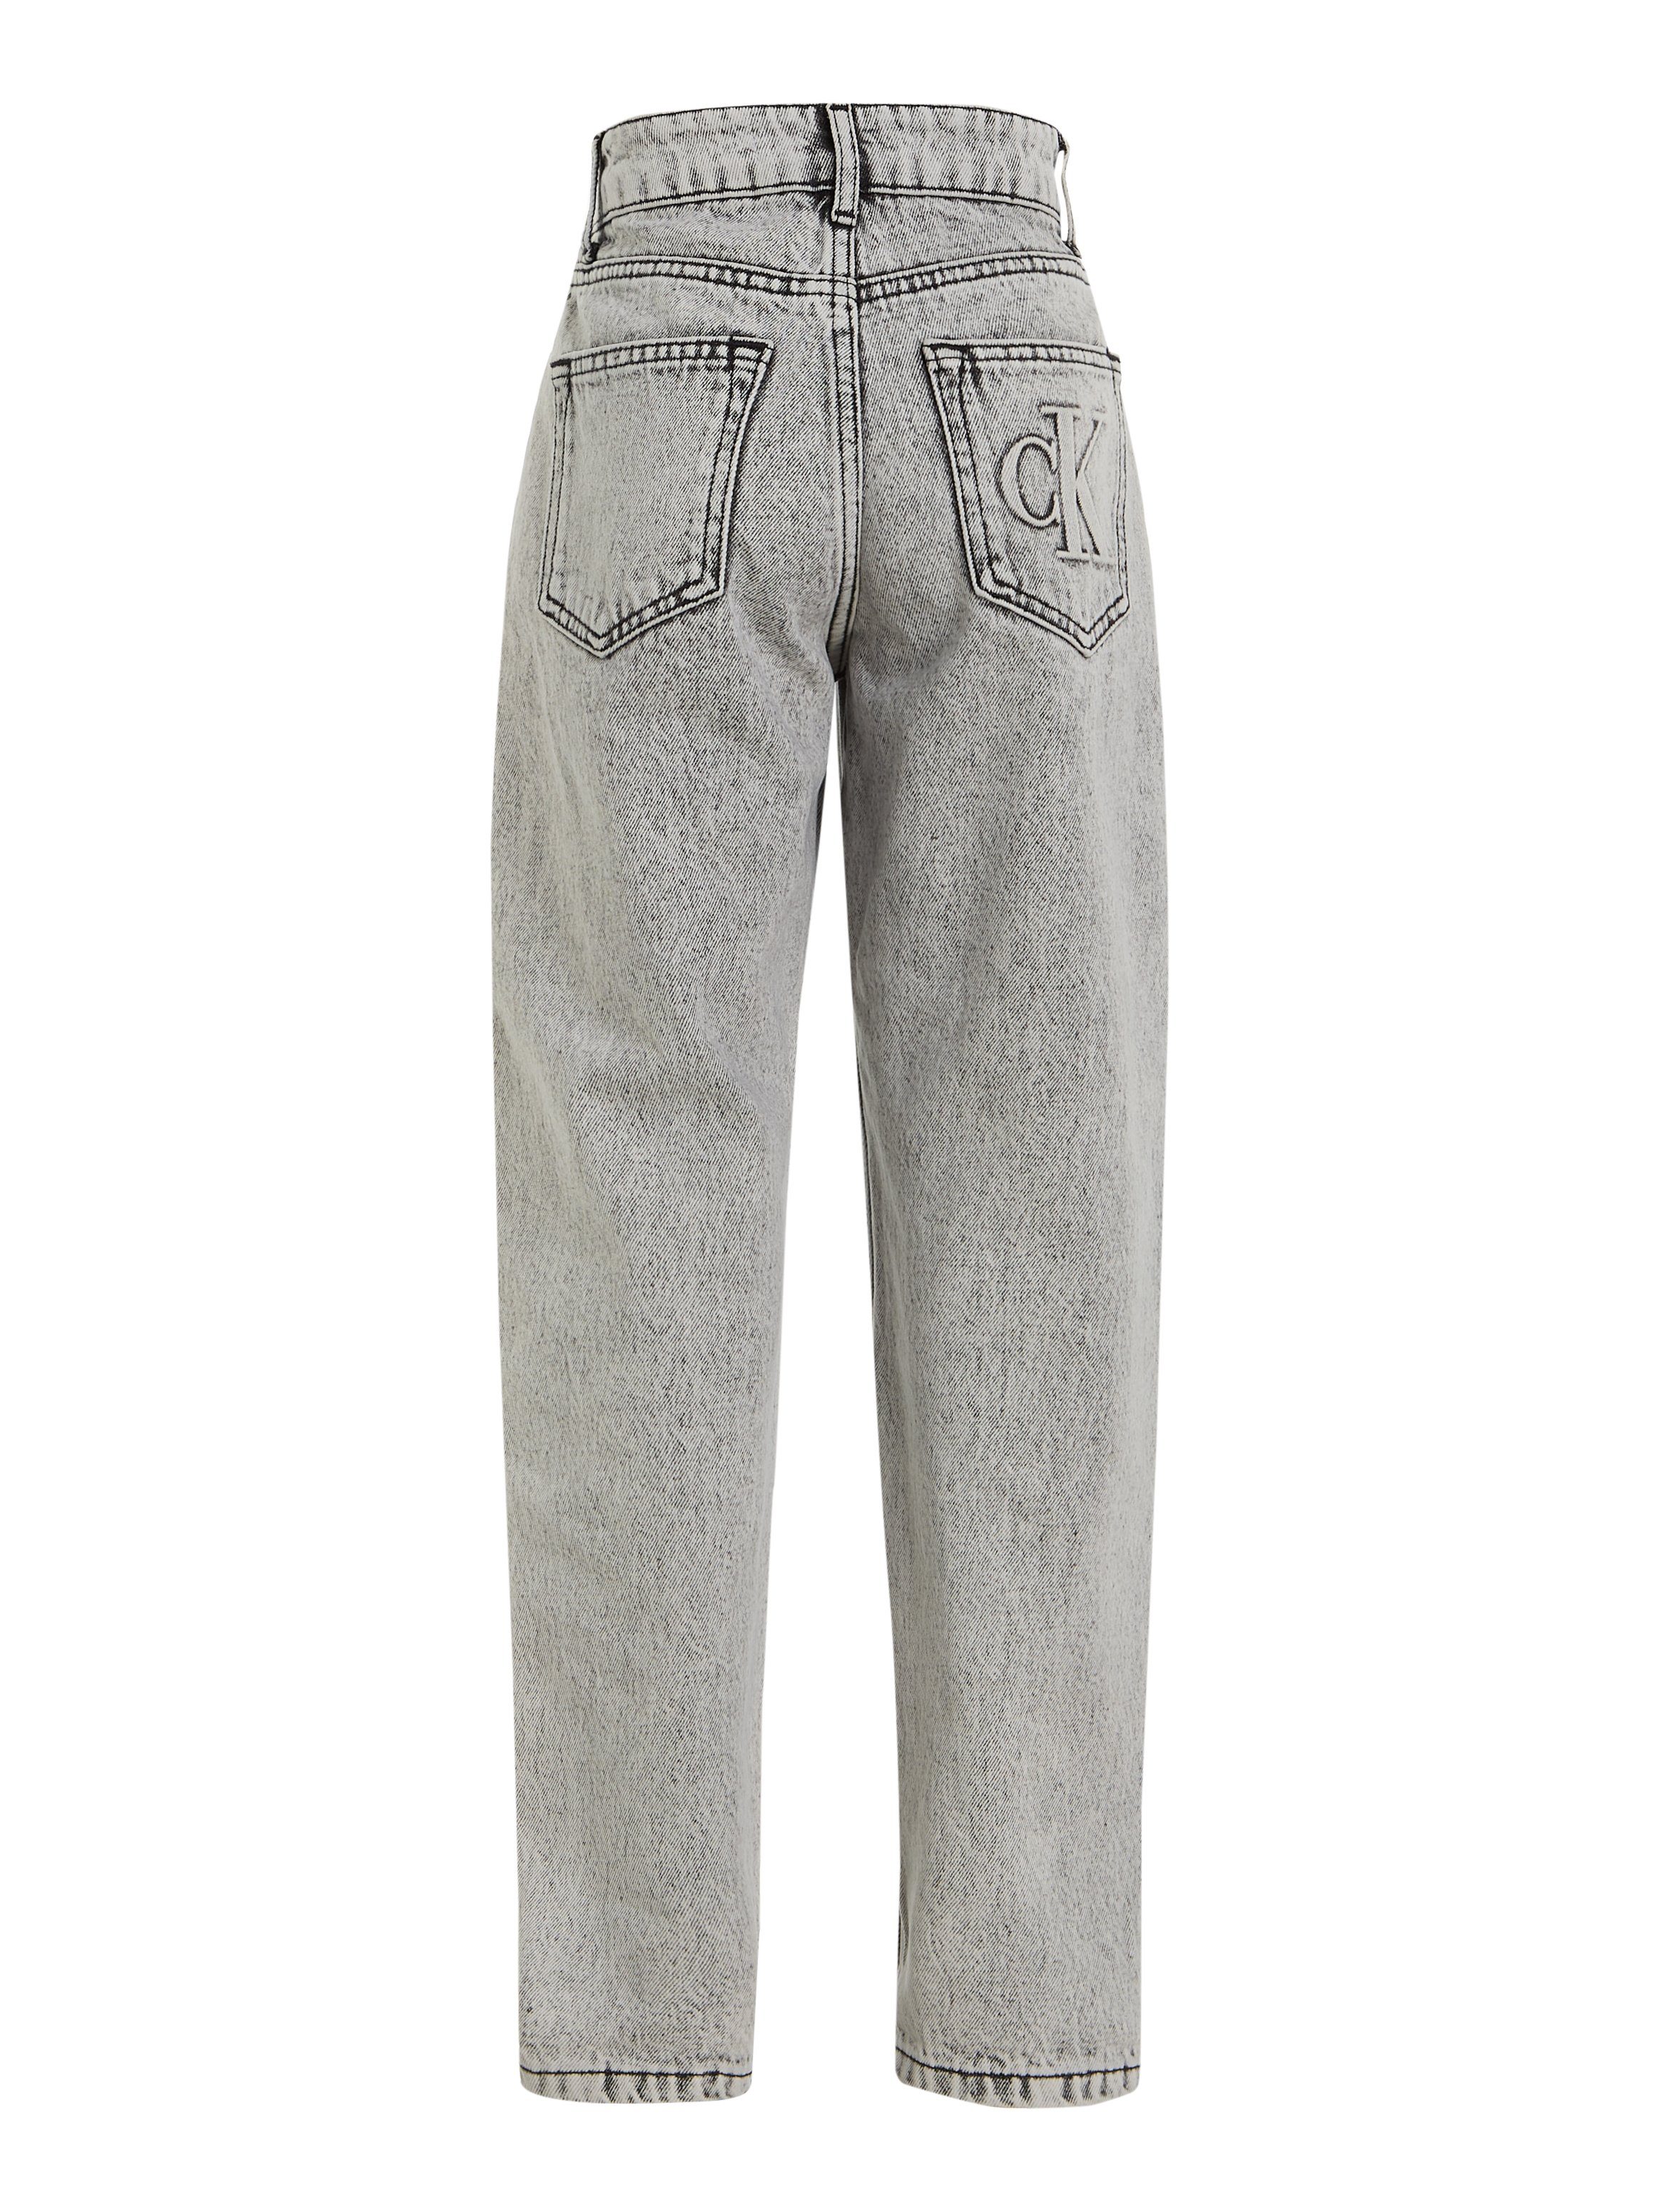 BARREL Jeans Klein Calvin LIGHT STONE GREY 5-Poket-Style im Straight-Jeans